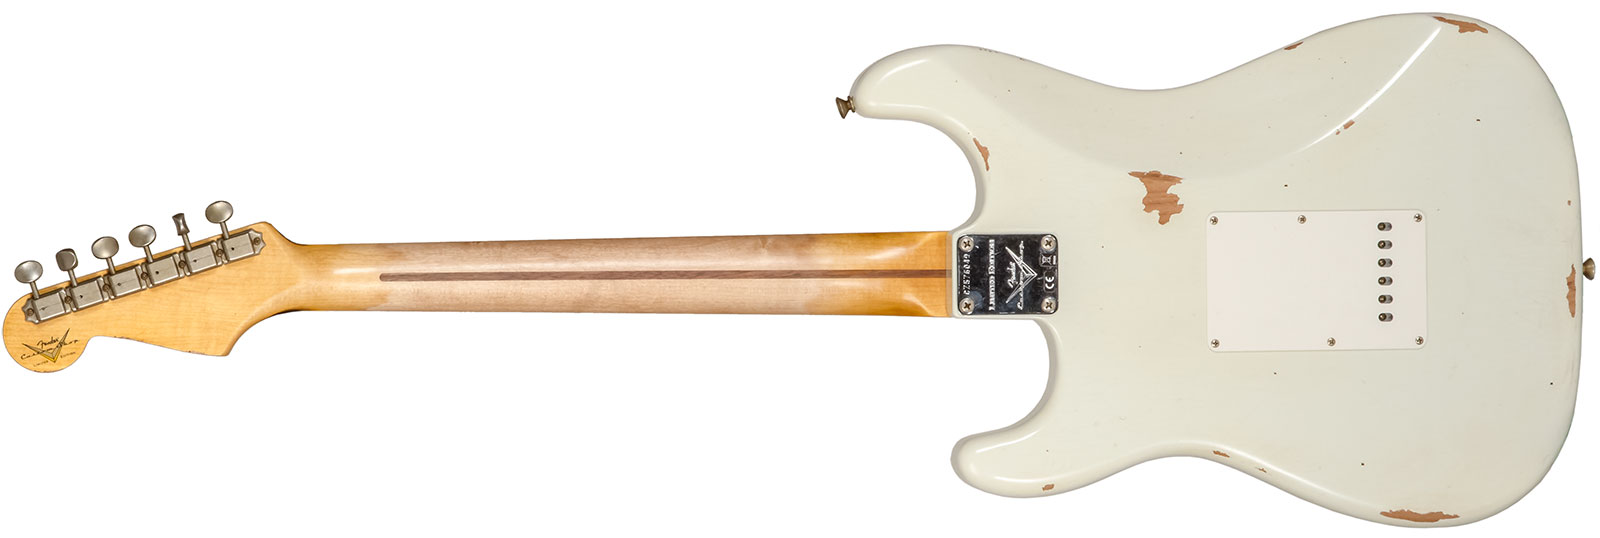 Fender Custom Shop Strat Fat 50's 3s Trem Mn #cz570495 - Relic India Ivory - Str shape electric guitar - Variation 1